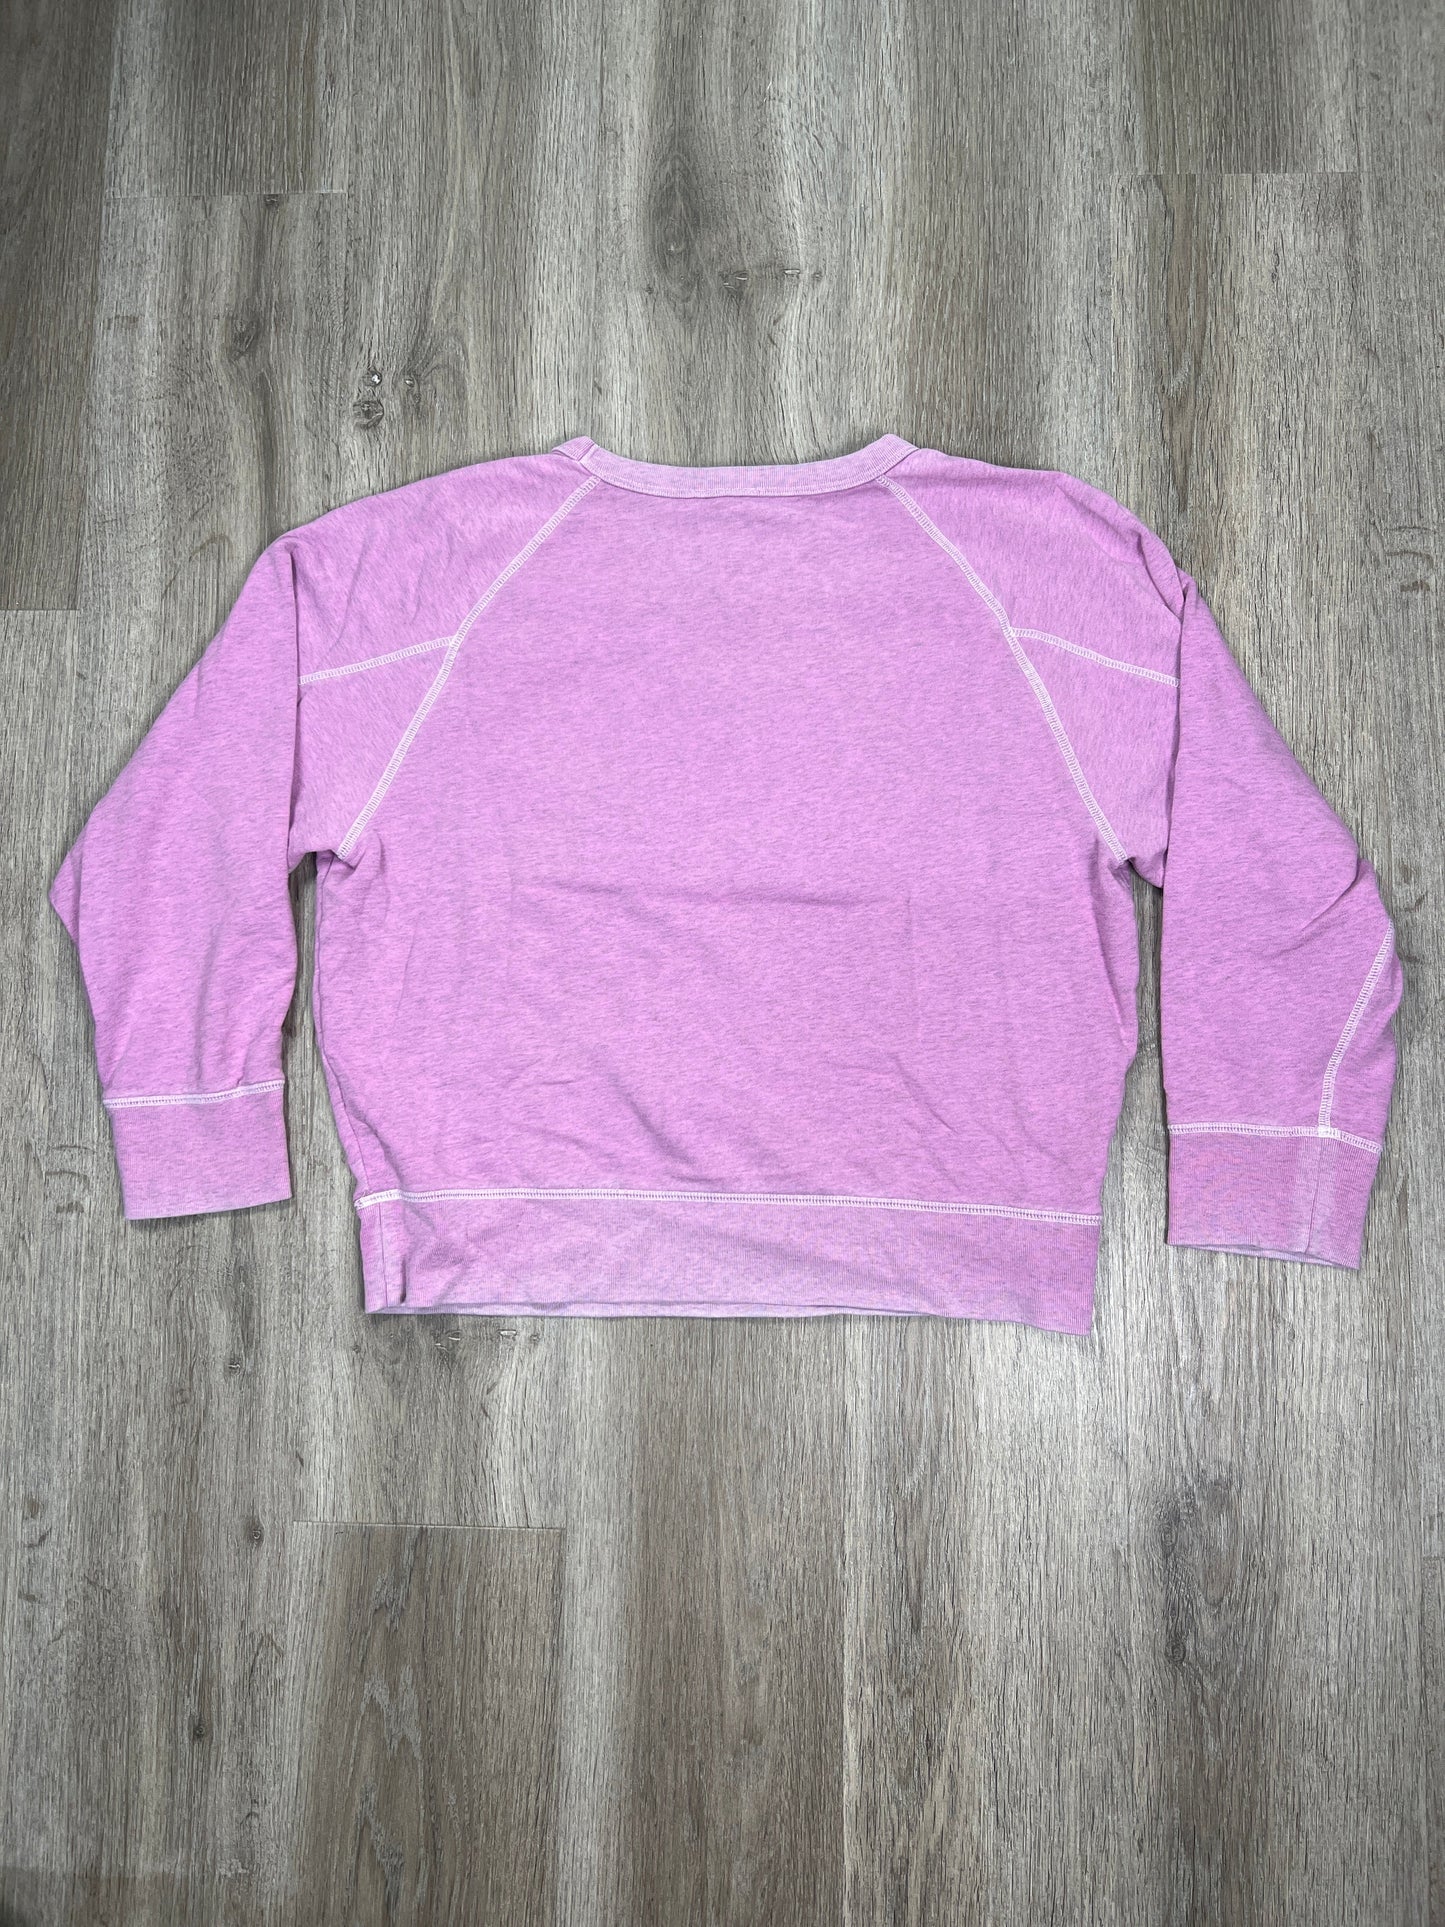 Purple Sweatshirt Crewneck Gap, Size L